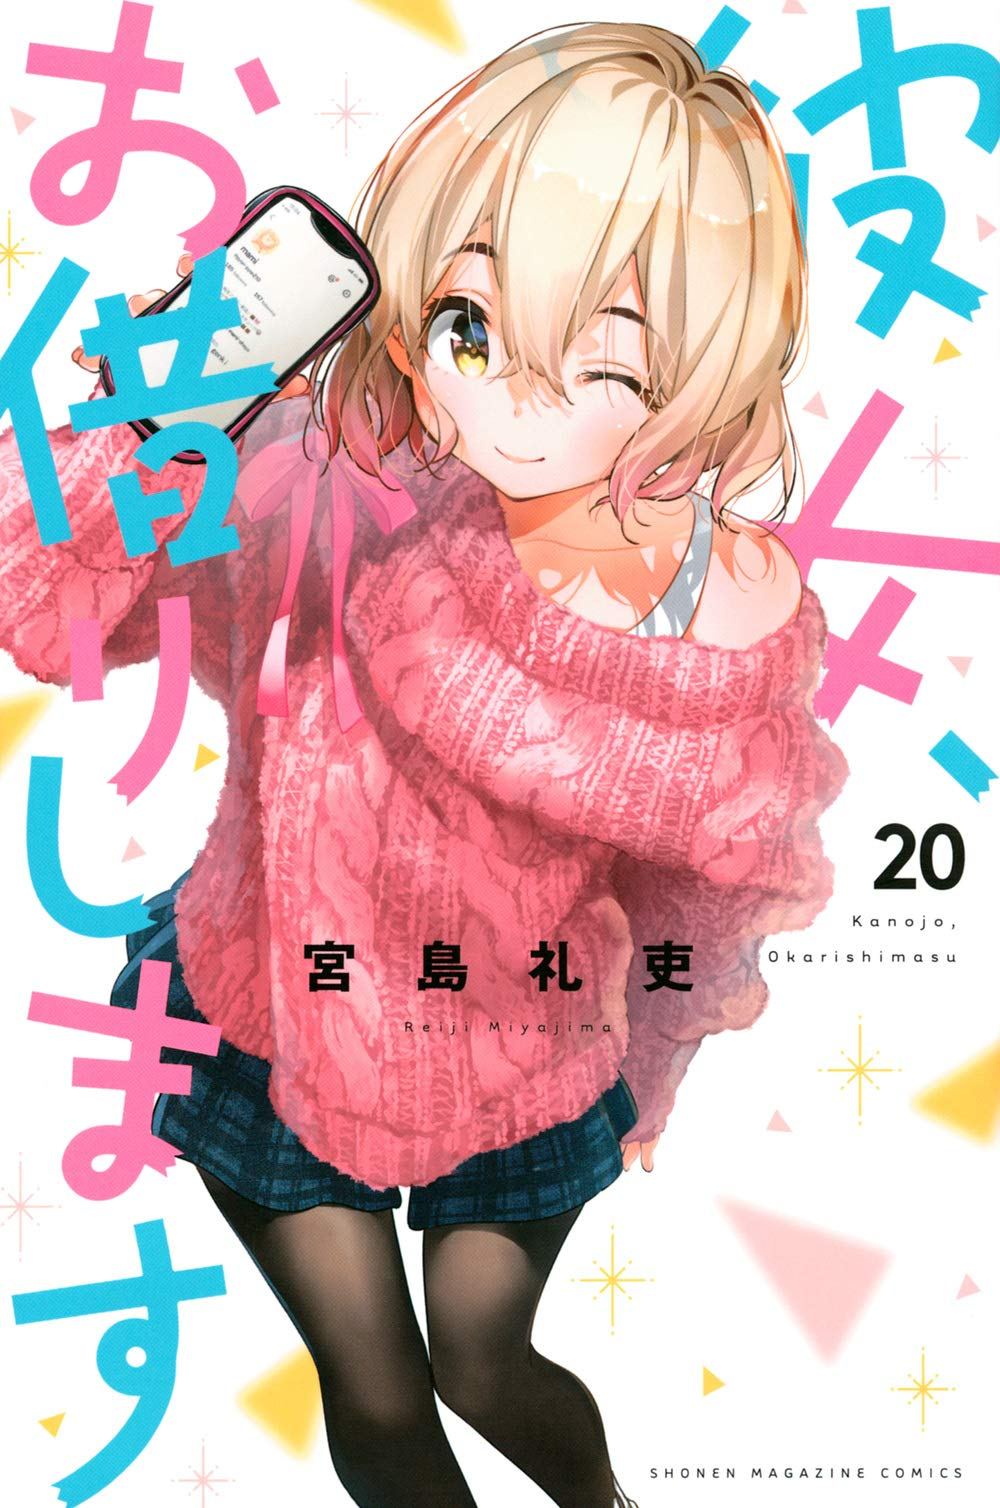 Read Kanojo, Okarishimasu Manga Chapter 271 in English Free Online